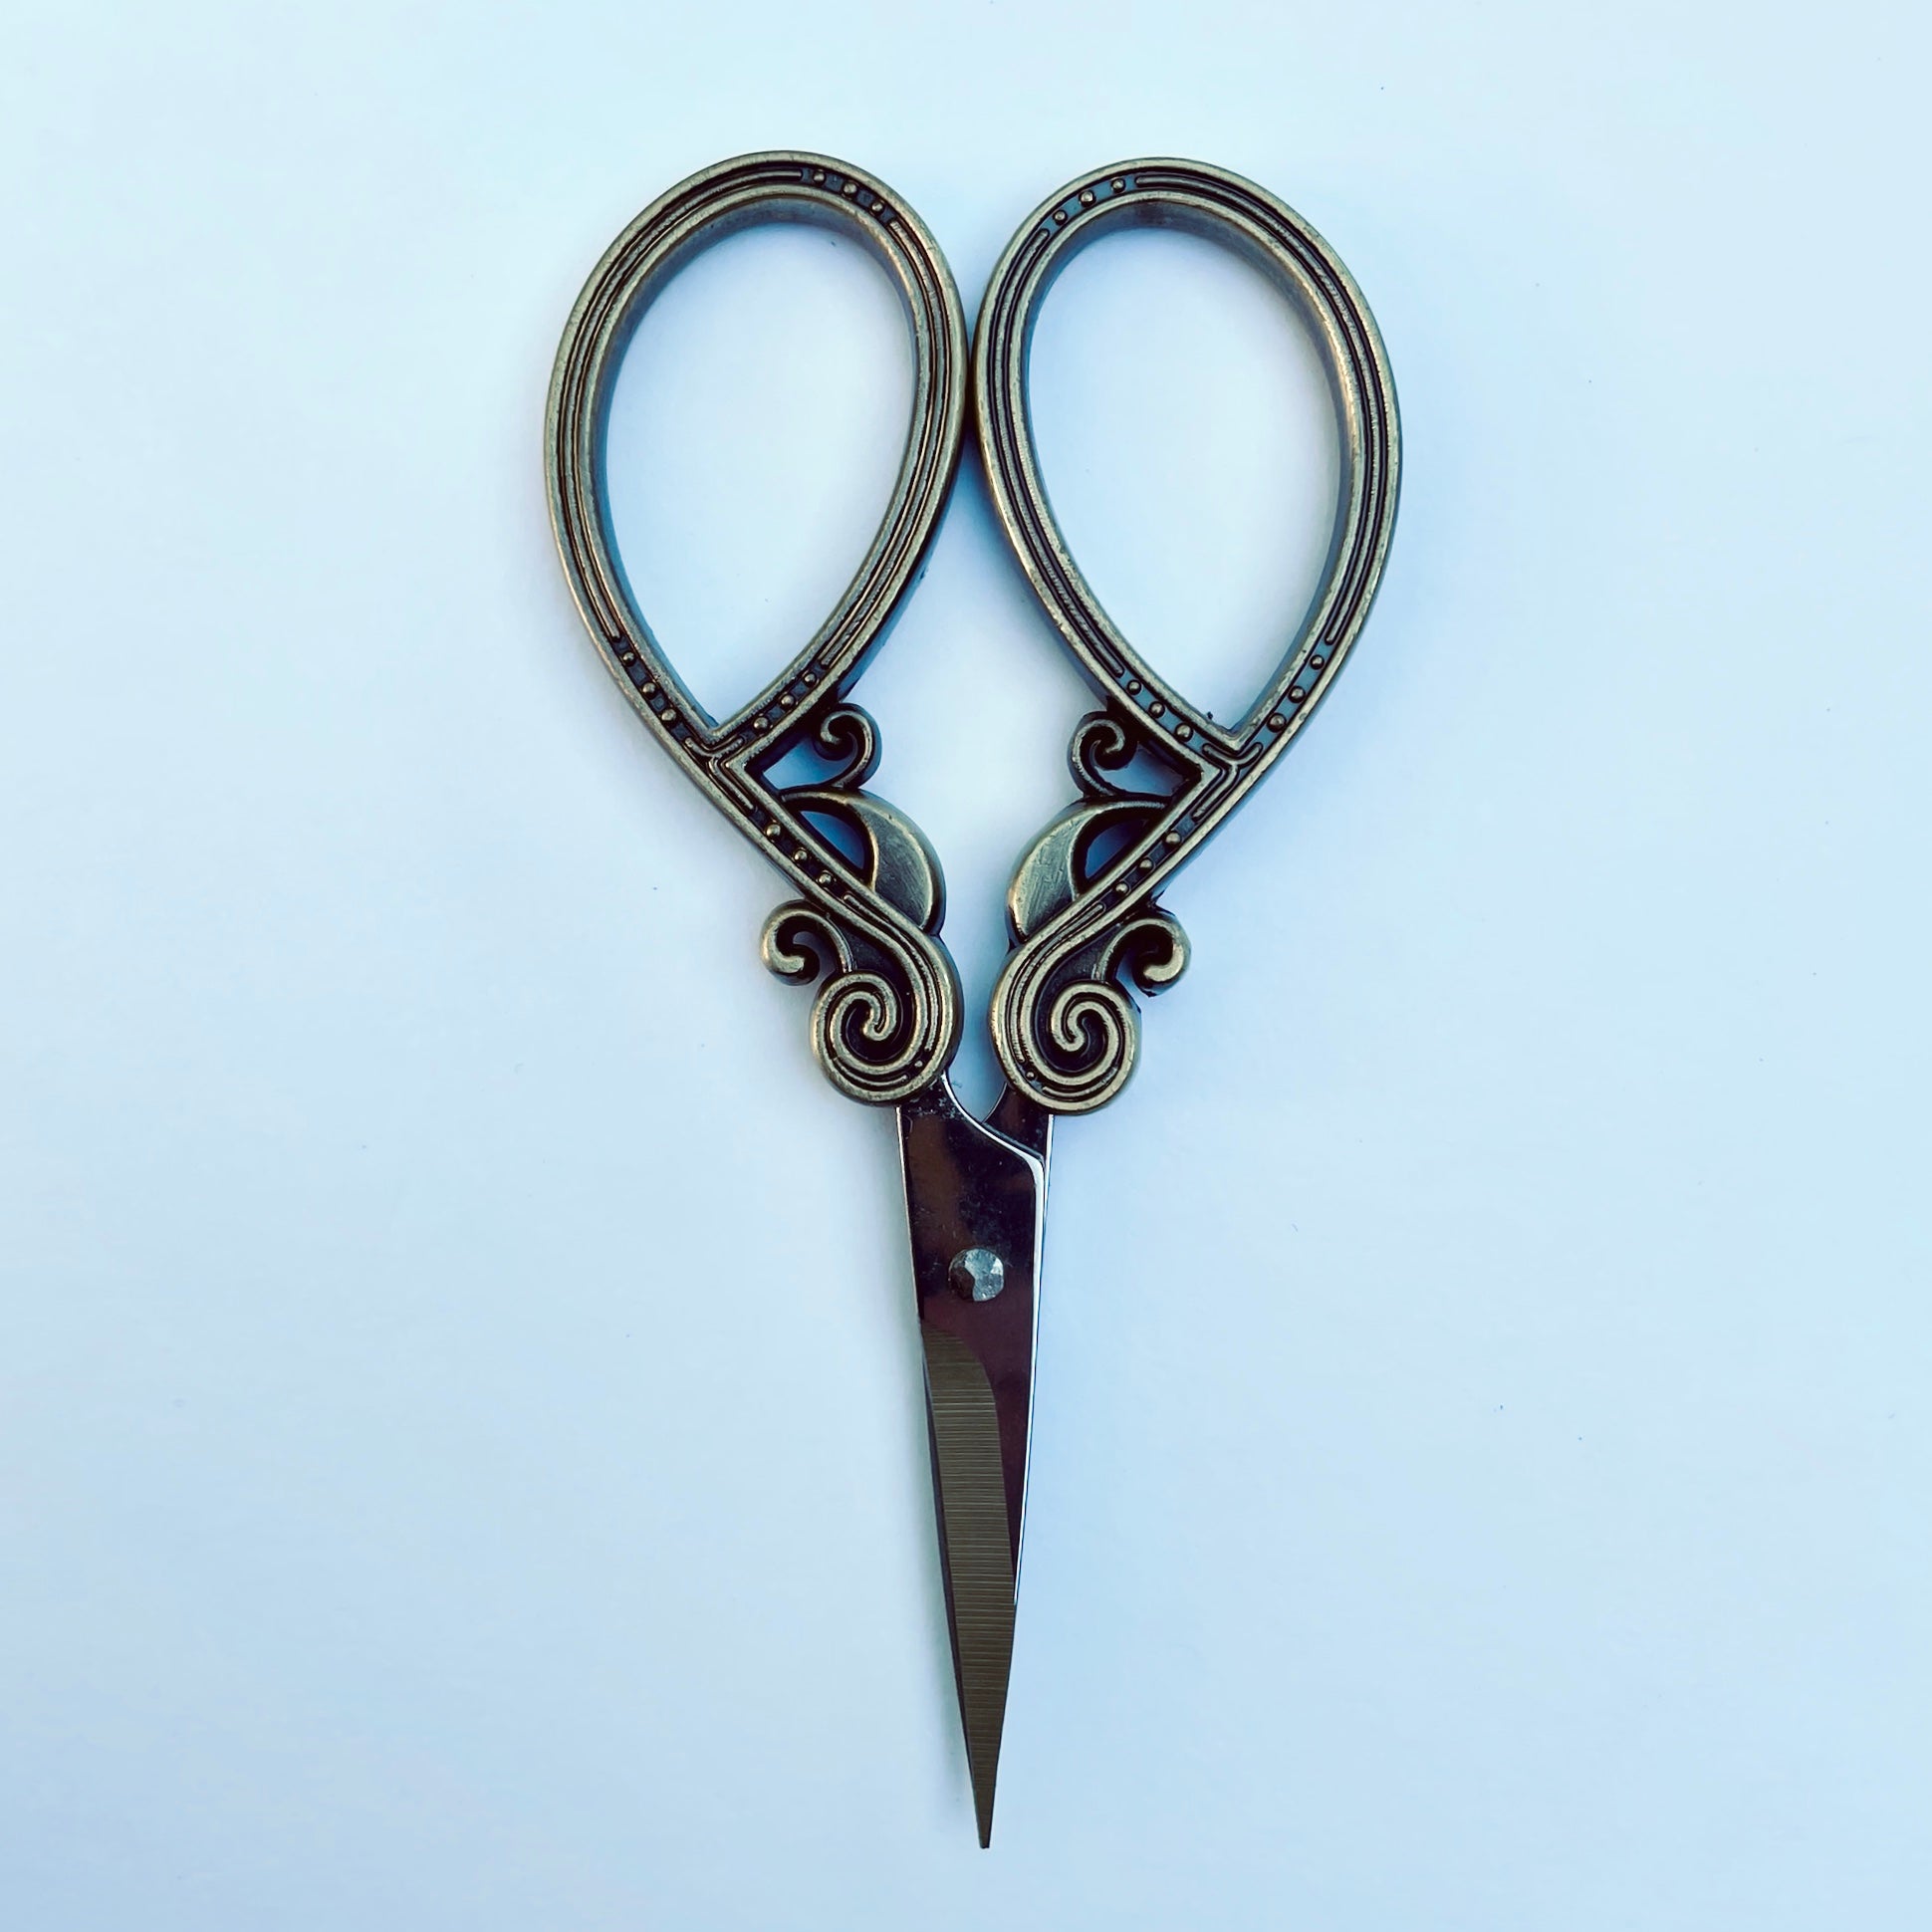 Antique Style Small Fussy Cut Scissors | 4.3